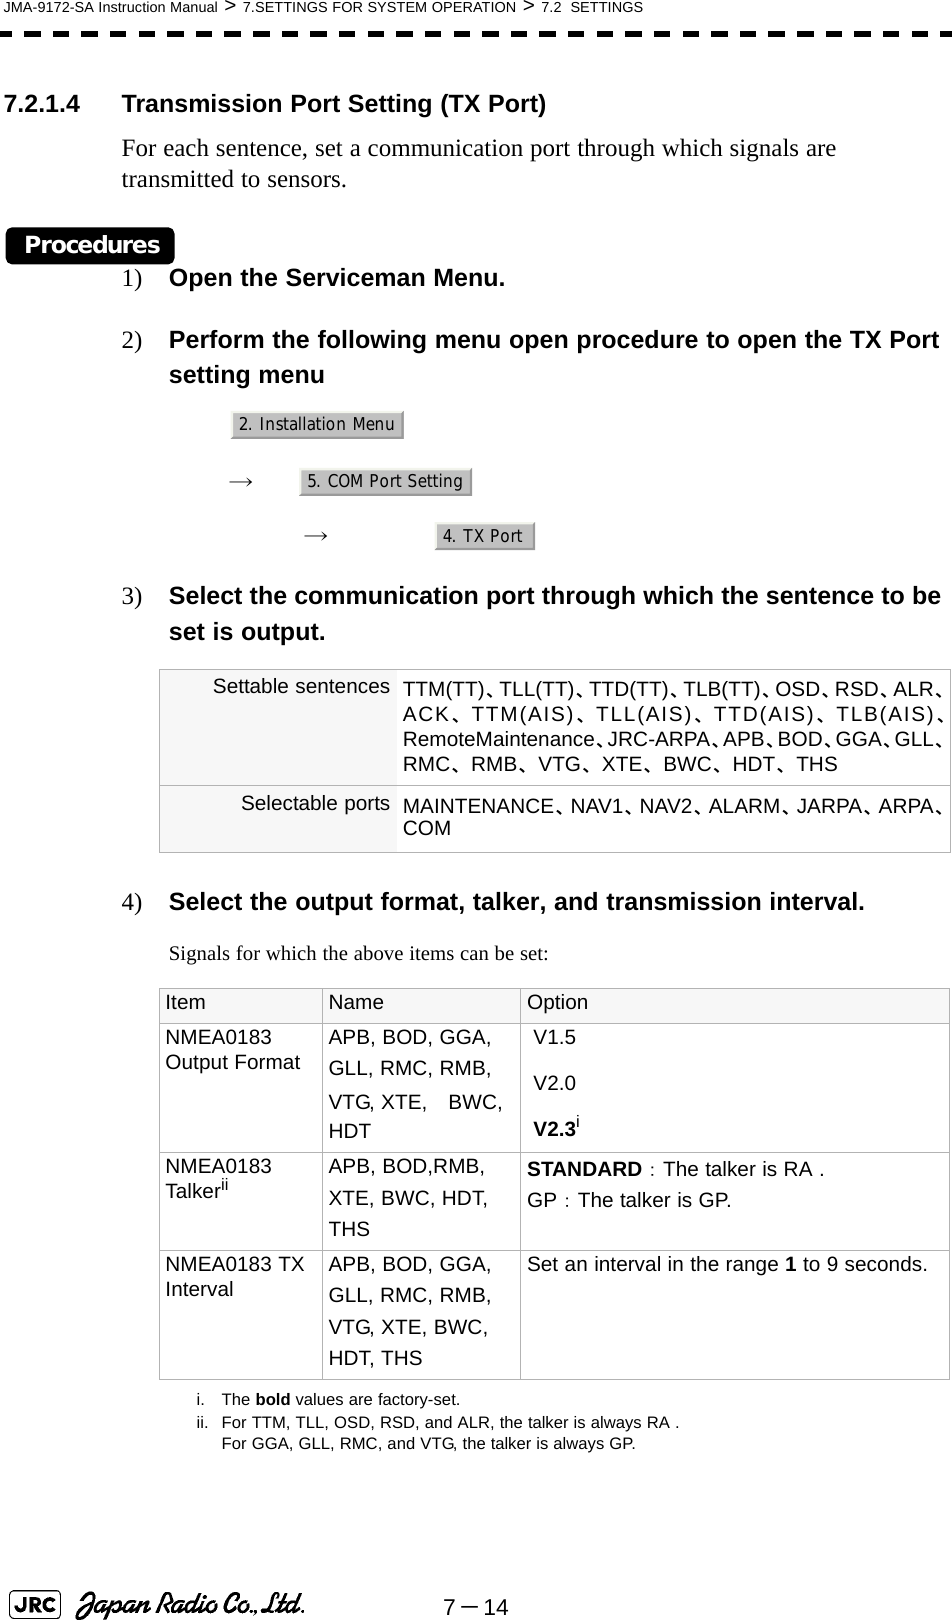 7－14JMA-9172-SA Instruction Manual &gt; 7.SETTINGS FOR SYSTEM OPERATION &gt; 7.2  SETTINGS7.2.1.4 Transmission Port Setting (TX Port)For each sentence, set a communication port through which signals are transmitted to sensors.Procedures1) Open the Serviceman Menu.2) Perform the following menu open procedure to open the TX Port setting menu　　 →　　　 →　3) Select the communication port through which the sentence to be set is output.4) Select the output format, talker, and transmission interval.Signals for which the above items can be set: Settable sentences TTM(TT)、TLL(TT)、TTD(TT)、TLB(TT)、OSD、RSD、ALR、ACK、TTM(AIS)、TLL(AIS)、TTD(AIS)、TLB(AIS)、RemoteMaintenance、JRC-ARPA、APB、BOD、GGA、GLL、RMC、RMB、VTG、XTE、BWC、HDT、THSSelectable ports MAINTENANCE、NAV1、NAV2、ALARM、JARPA、ARPA、COMItem Name OptionNMEA0183 Output Format APB, BOD, GGA, GLL, RMC, RMB,VTG, XTE,　BWC, HDT V1.5 V2.0 V2.3ii. The bold values are factory-set.NMEA0183 Talkeriiii. For TTM, TLL, OSD, RSD, and ALR, the talker is always RA .For GGA, GLL, RMC, and VTG, the talker is always GP.APB, BOD,RMB, XTE, BWC, HDT, THSSTANDARD：The talker is RA .GP：The talker is GP.NMEA0183 TX Interval APB, BOD, GGA, GLL, RMC, RMB,VTG, XTE, BWC, HDT, THSSet an interval in the range 1 to 9 seconds.2. Installation Menu5. COM Port Setting4. TX Port